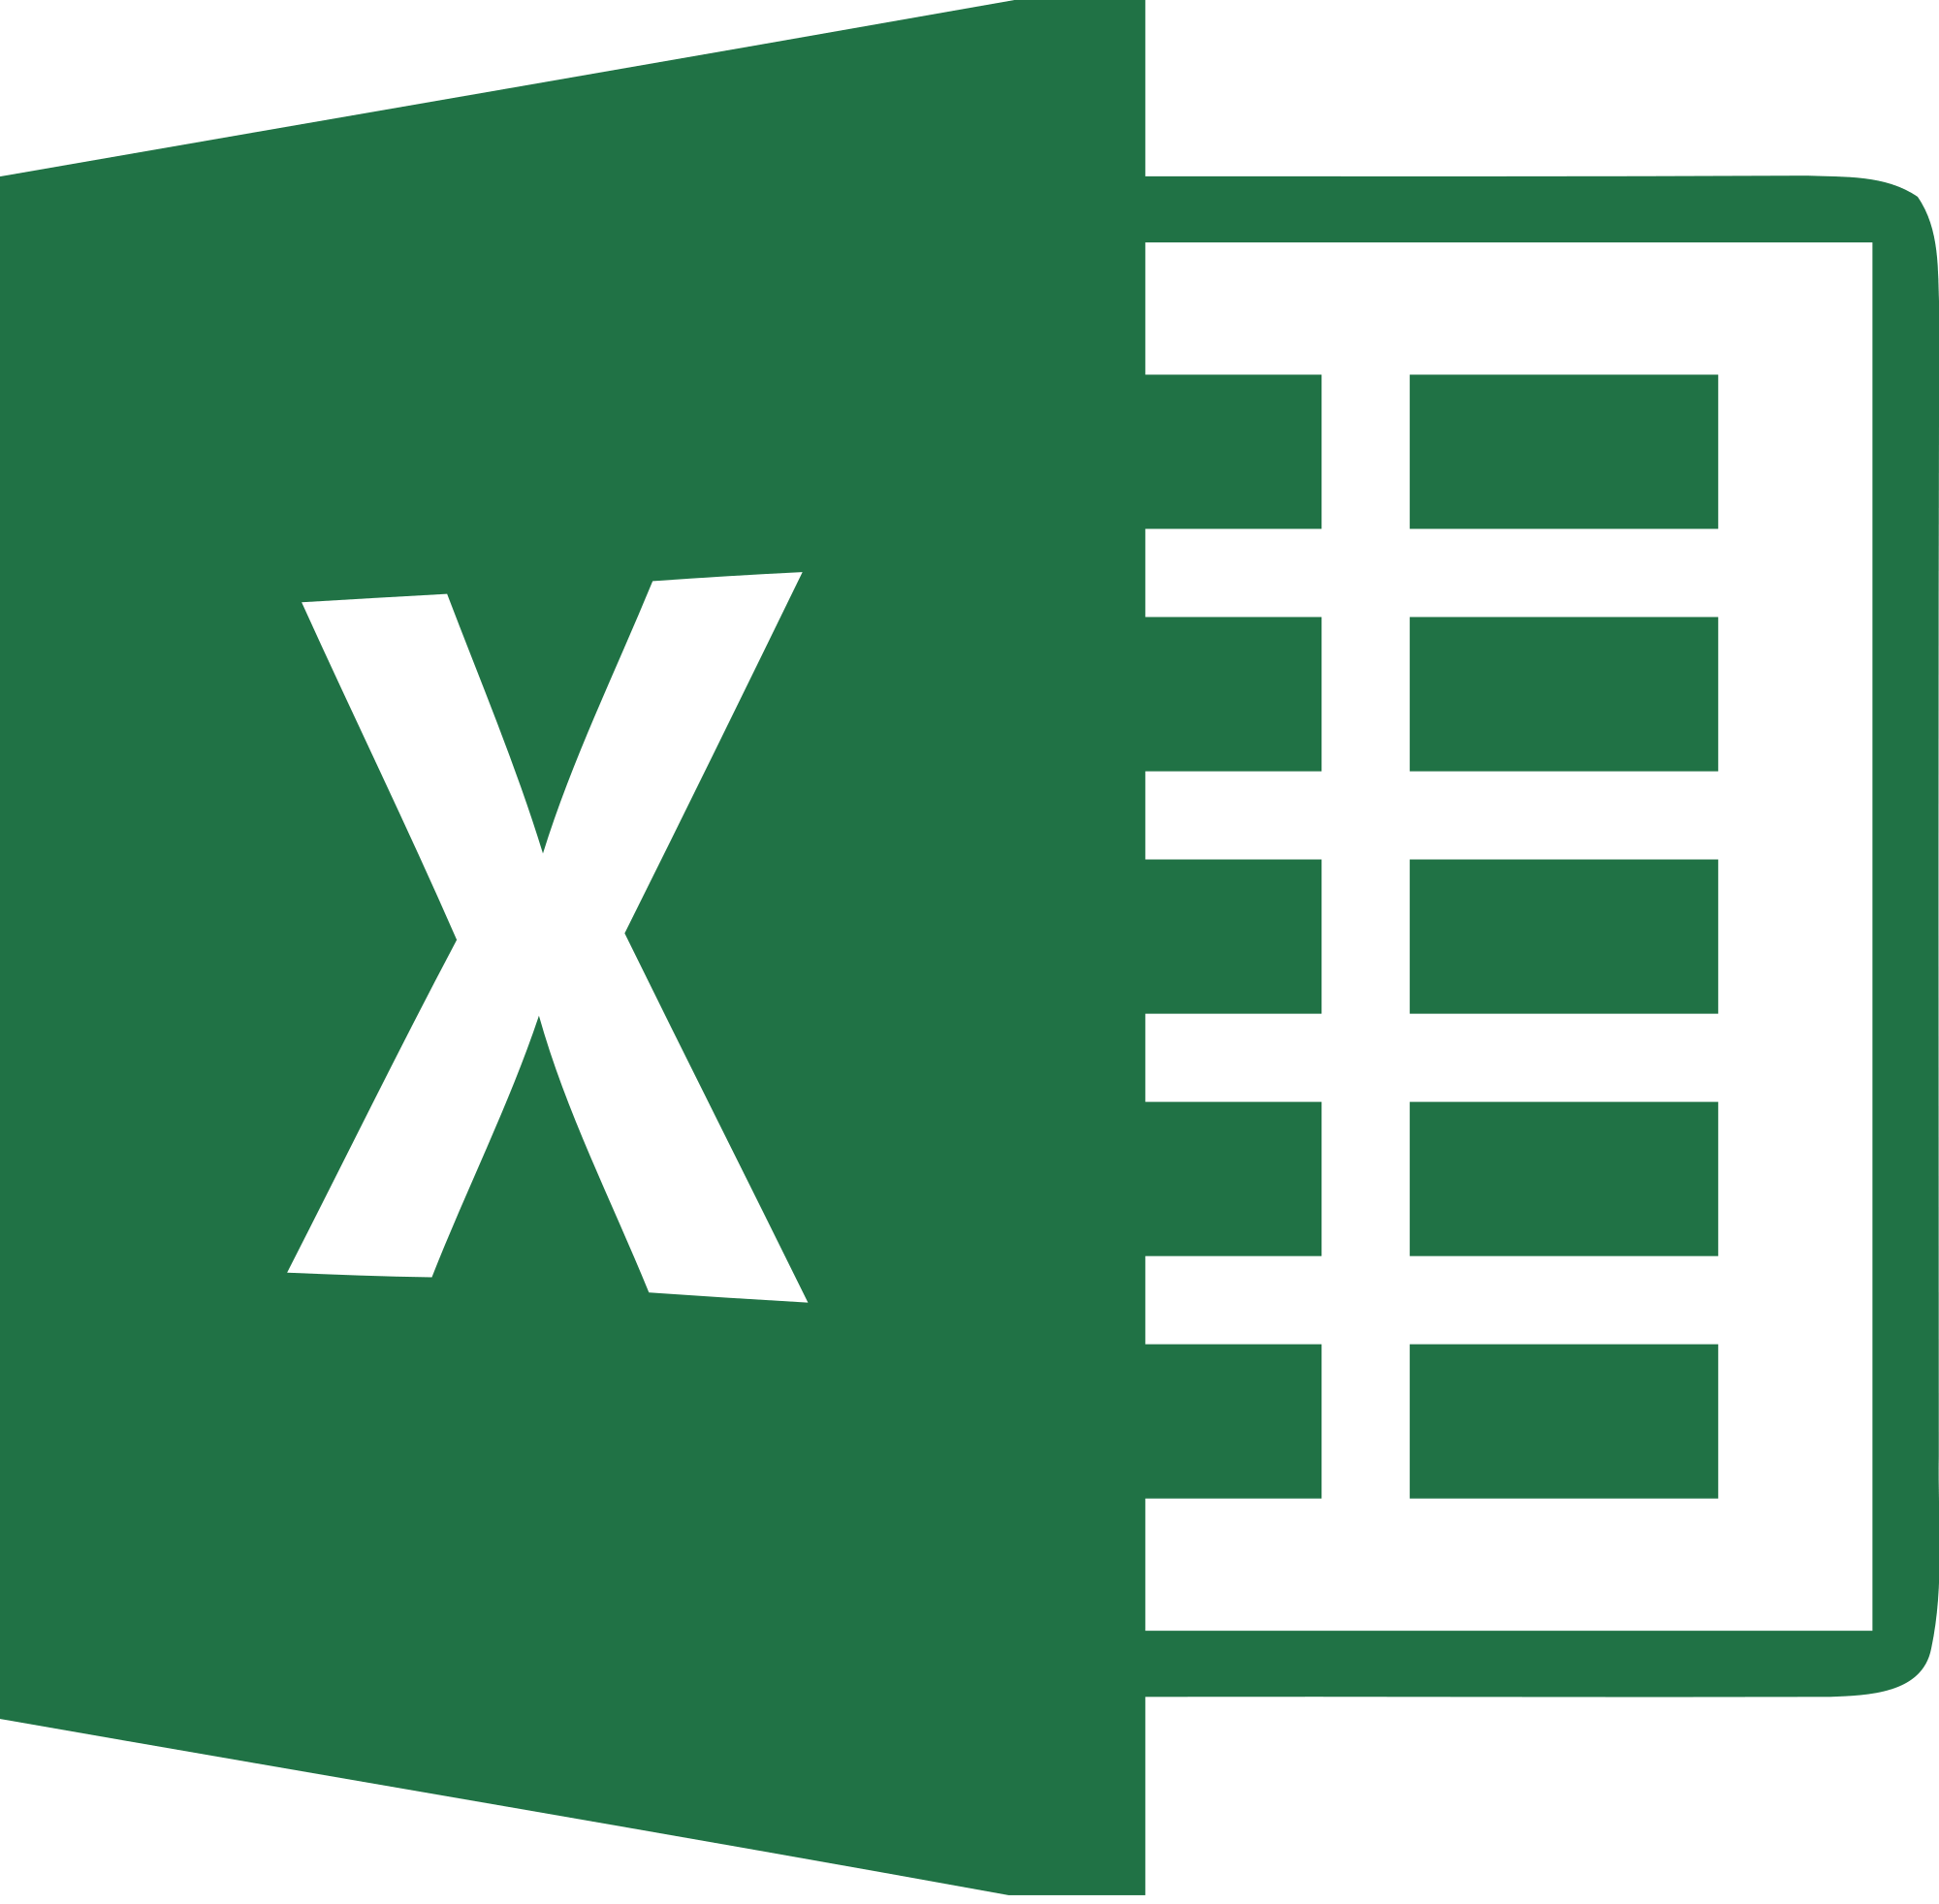 Microsoft Excel 2013 Logo - File:Microsoft Excel 2013 logo.svg - Wikimedia Commons